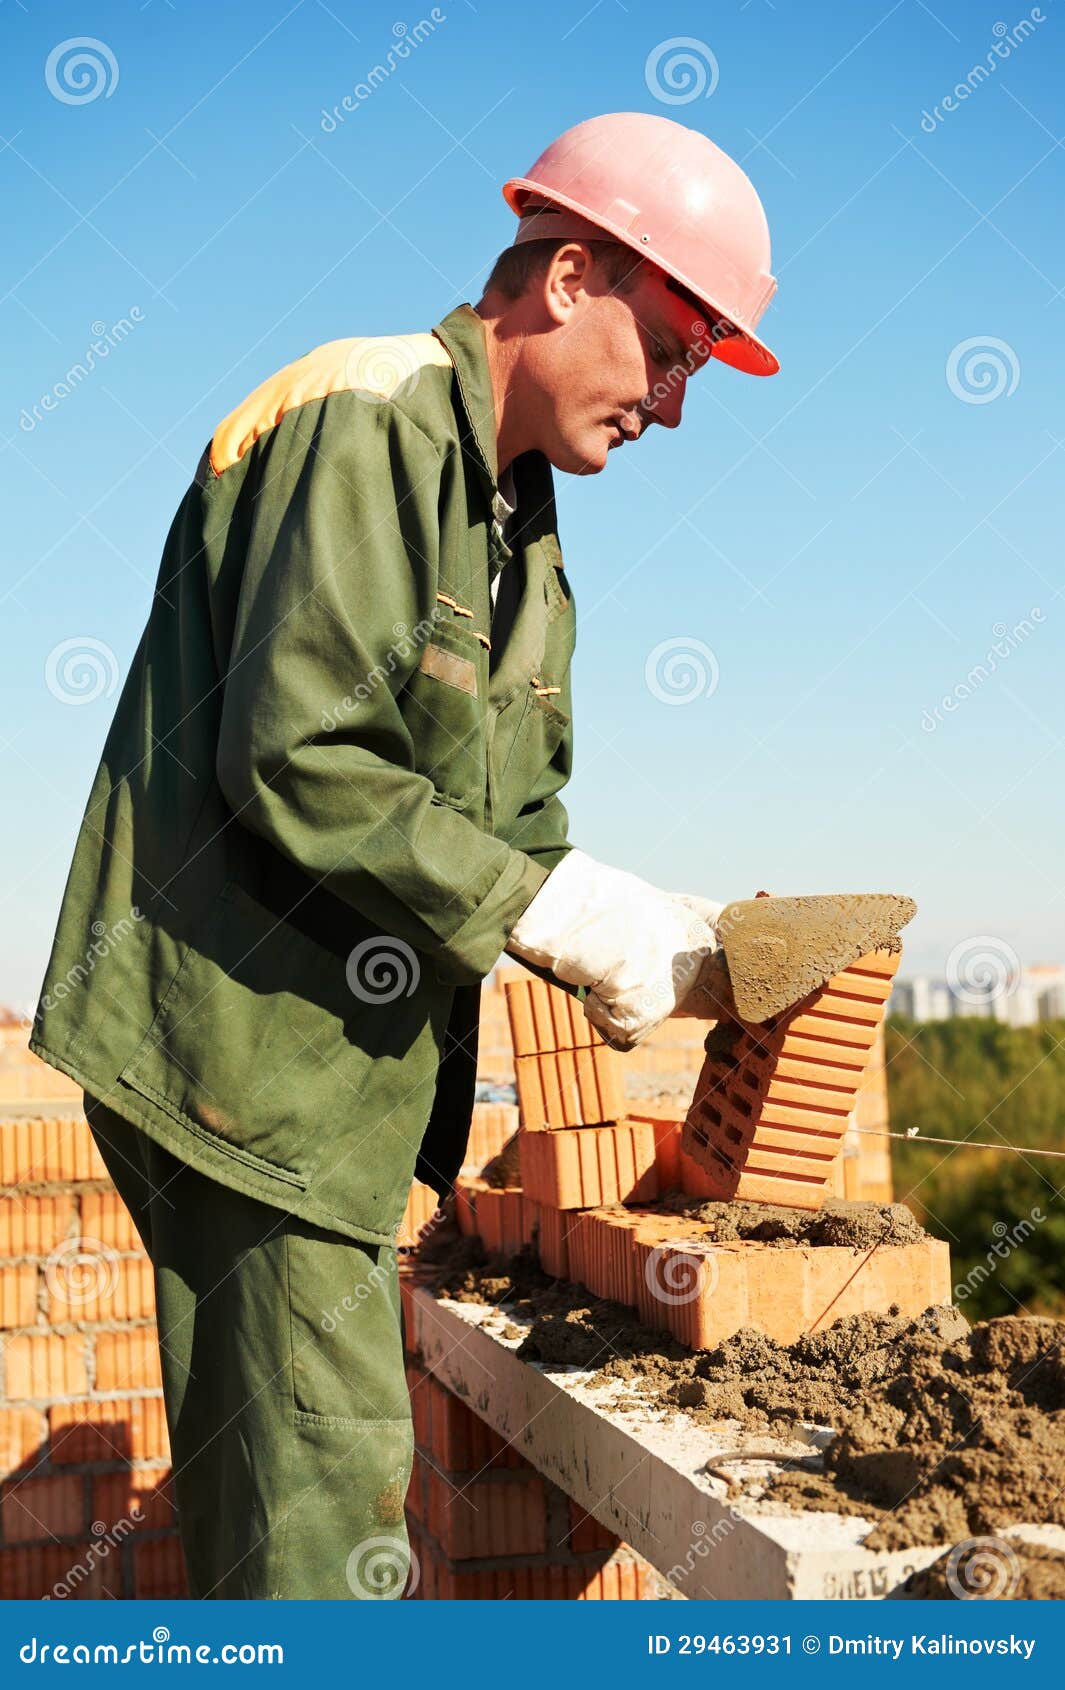 Construction Mason Worker Bricklayer Stock Image - Image of helmet, 29463931